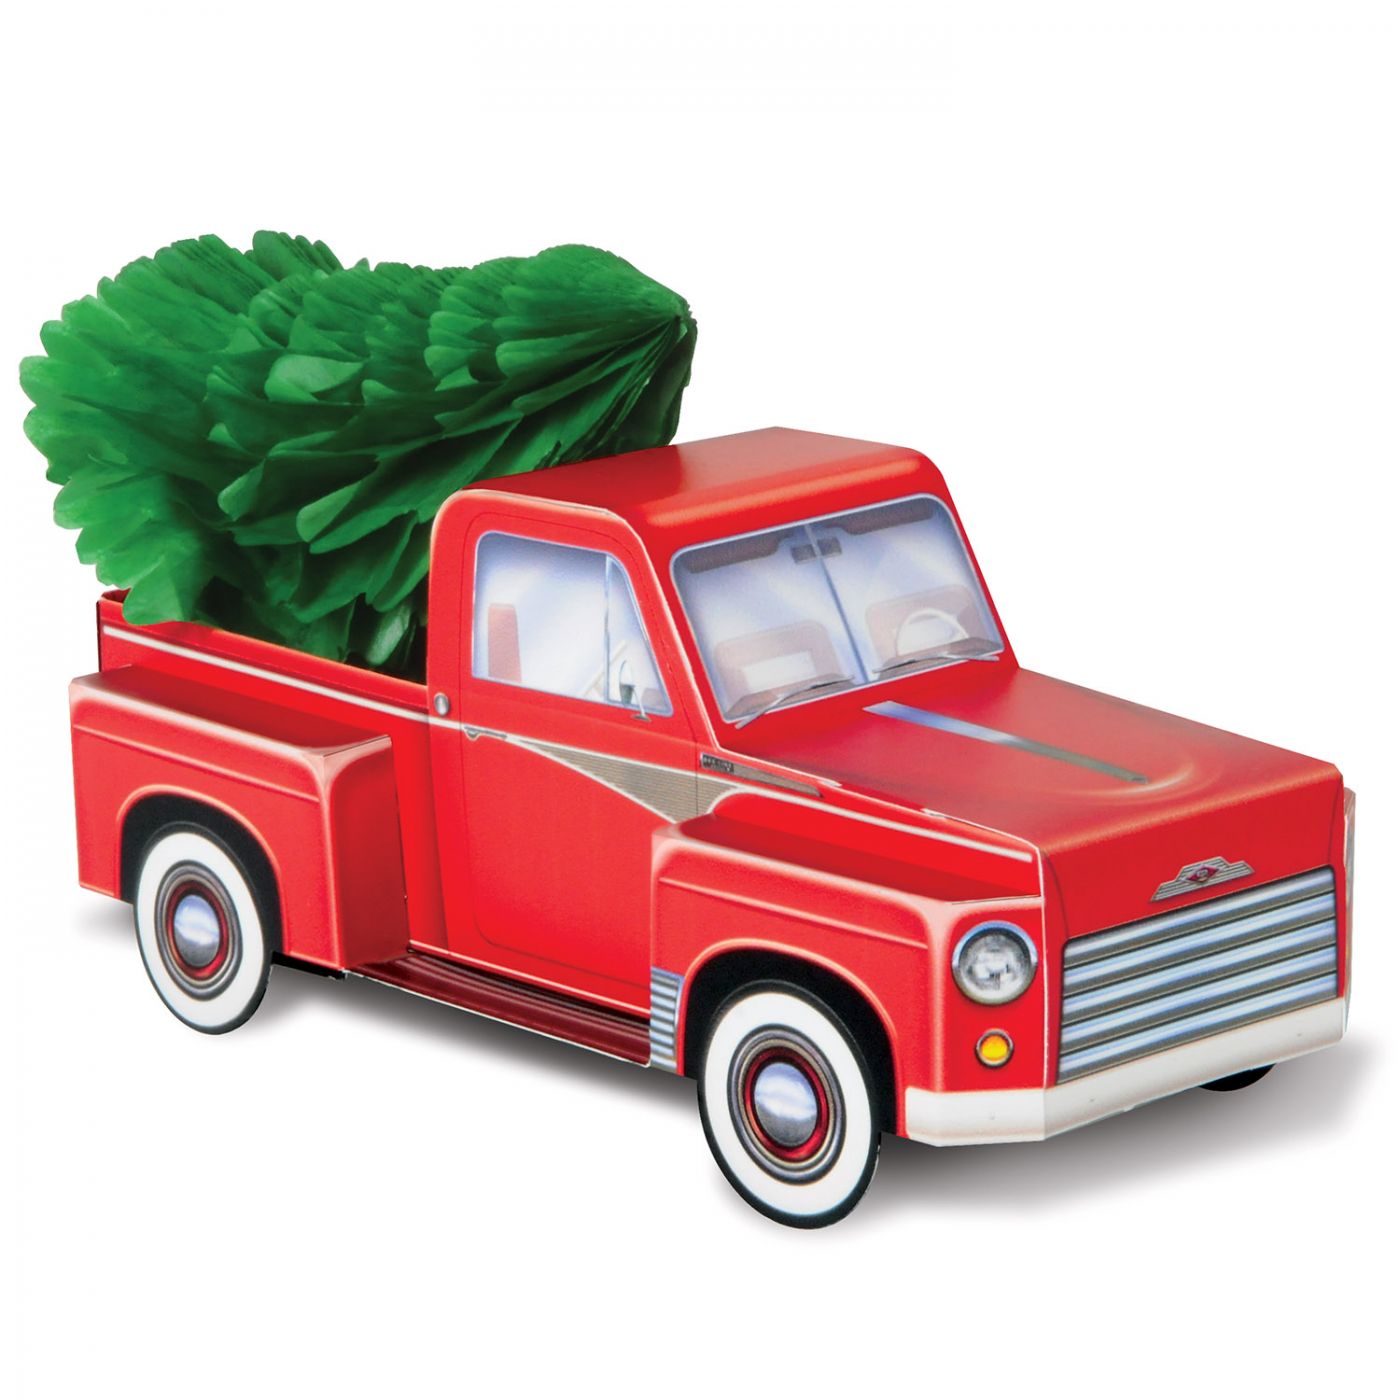 3-D Christmas Truck Centerpiece image